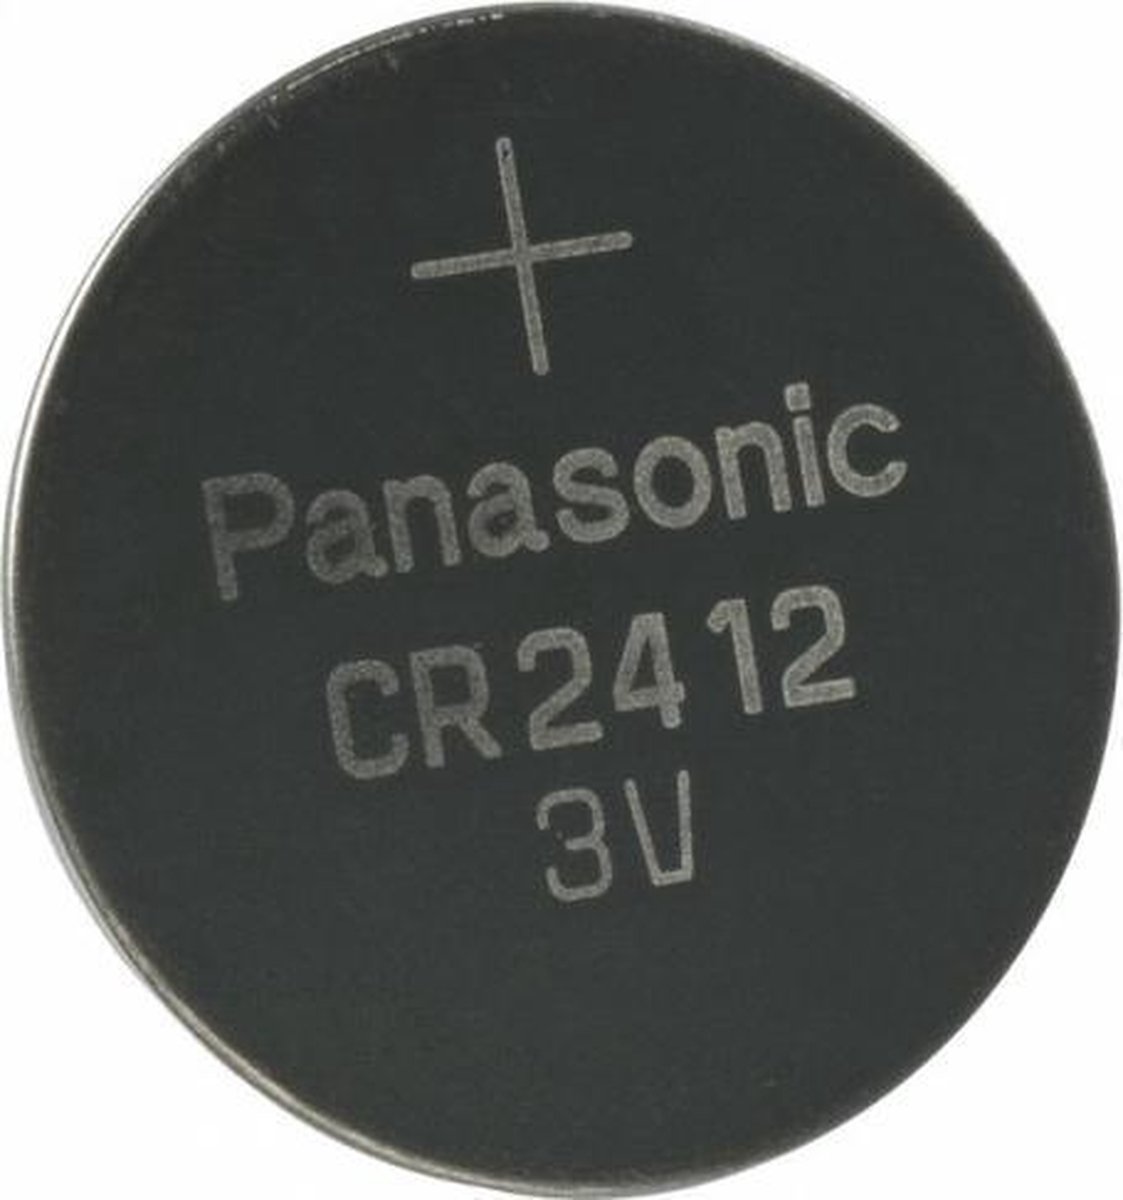 Panasonic CR2412 3V knoopcel